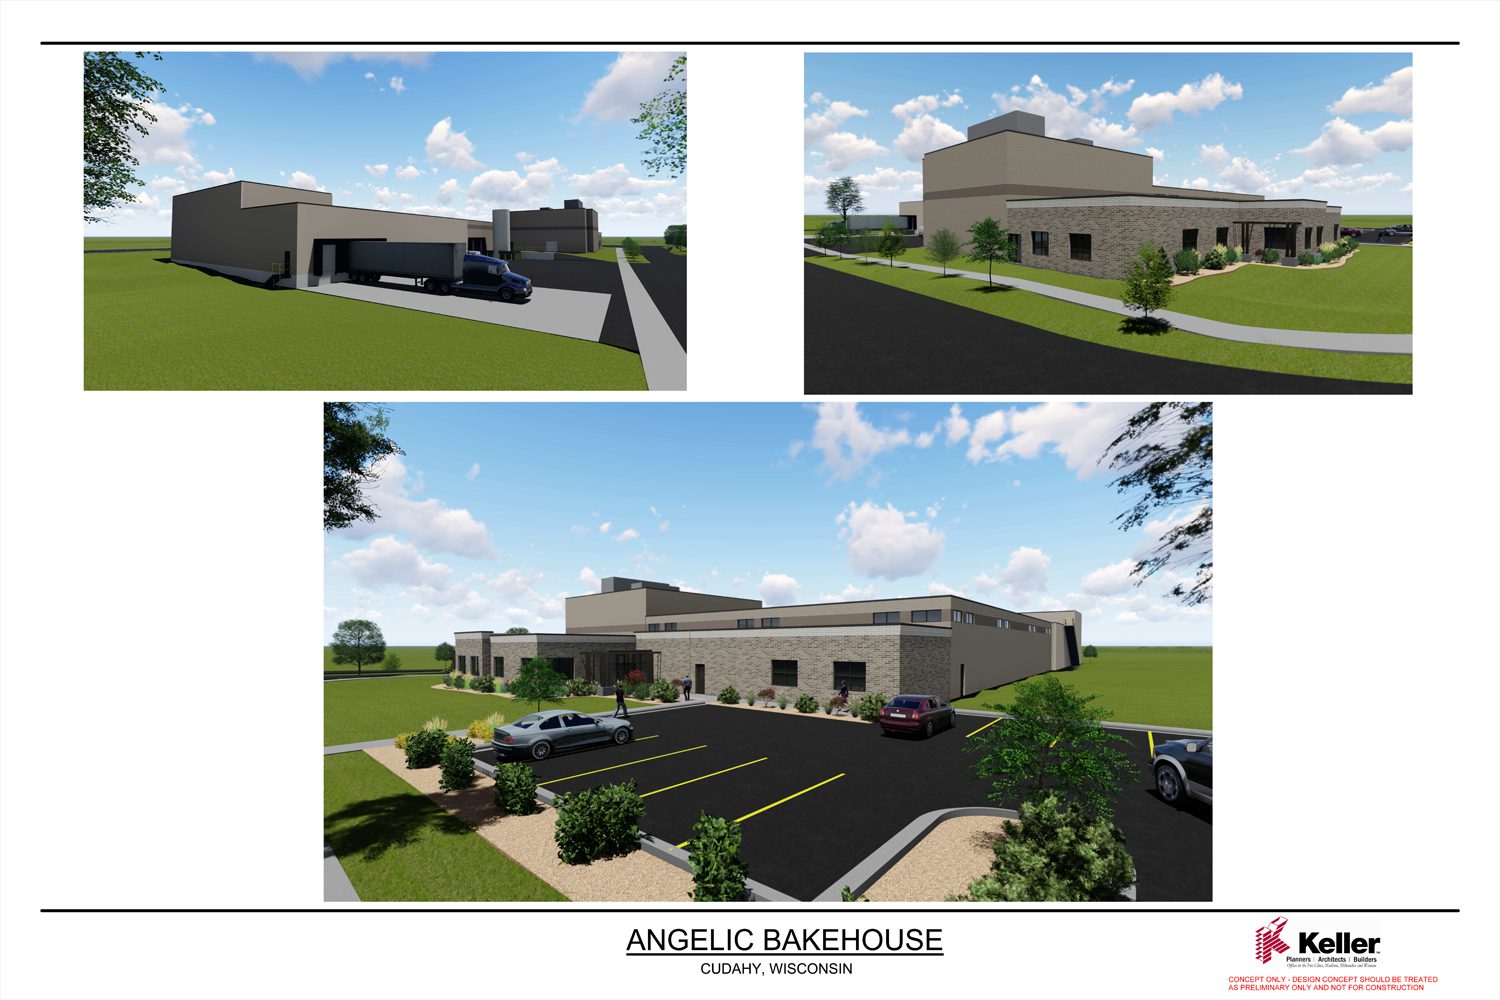 Angelic Bakehouse 1 - Keller, Inc. to Build for Angelic Bakehouse